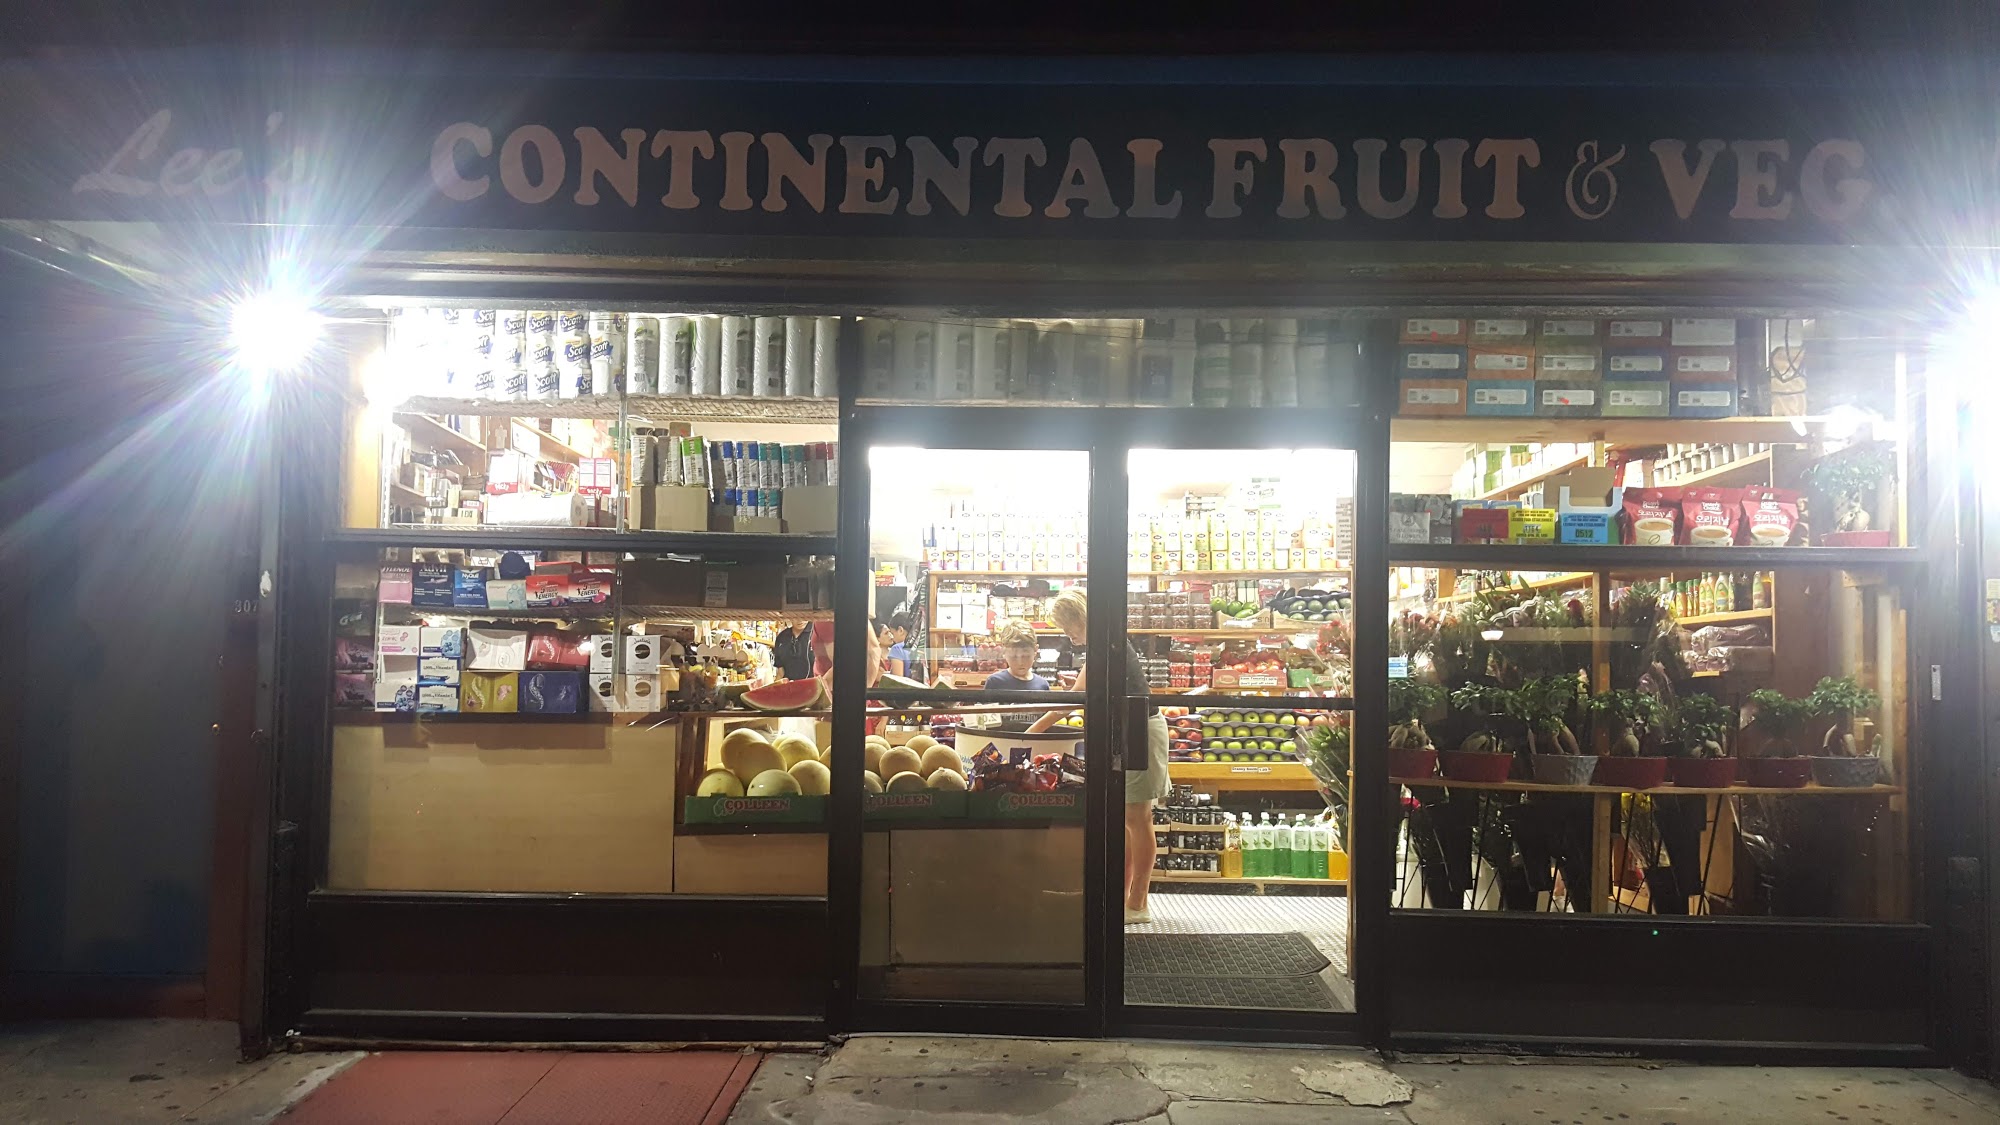 Lee's Continental Fruit & Vegetables